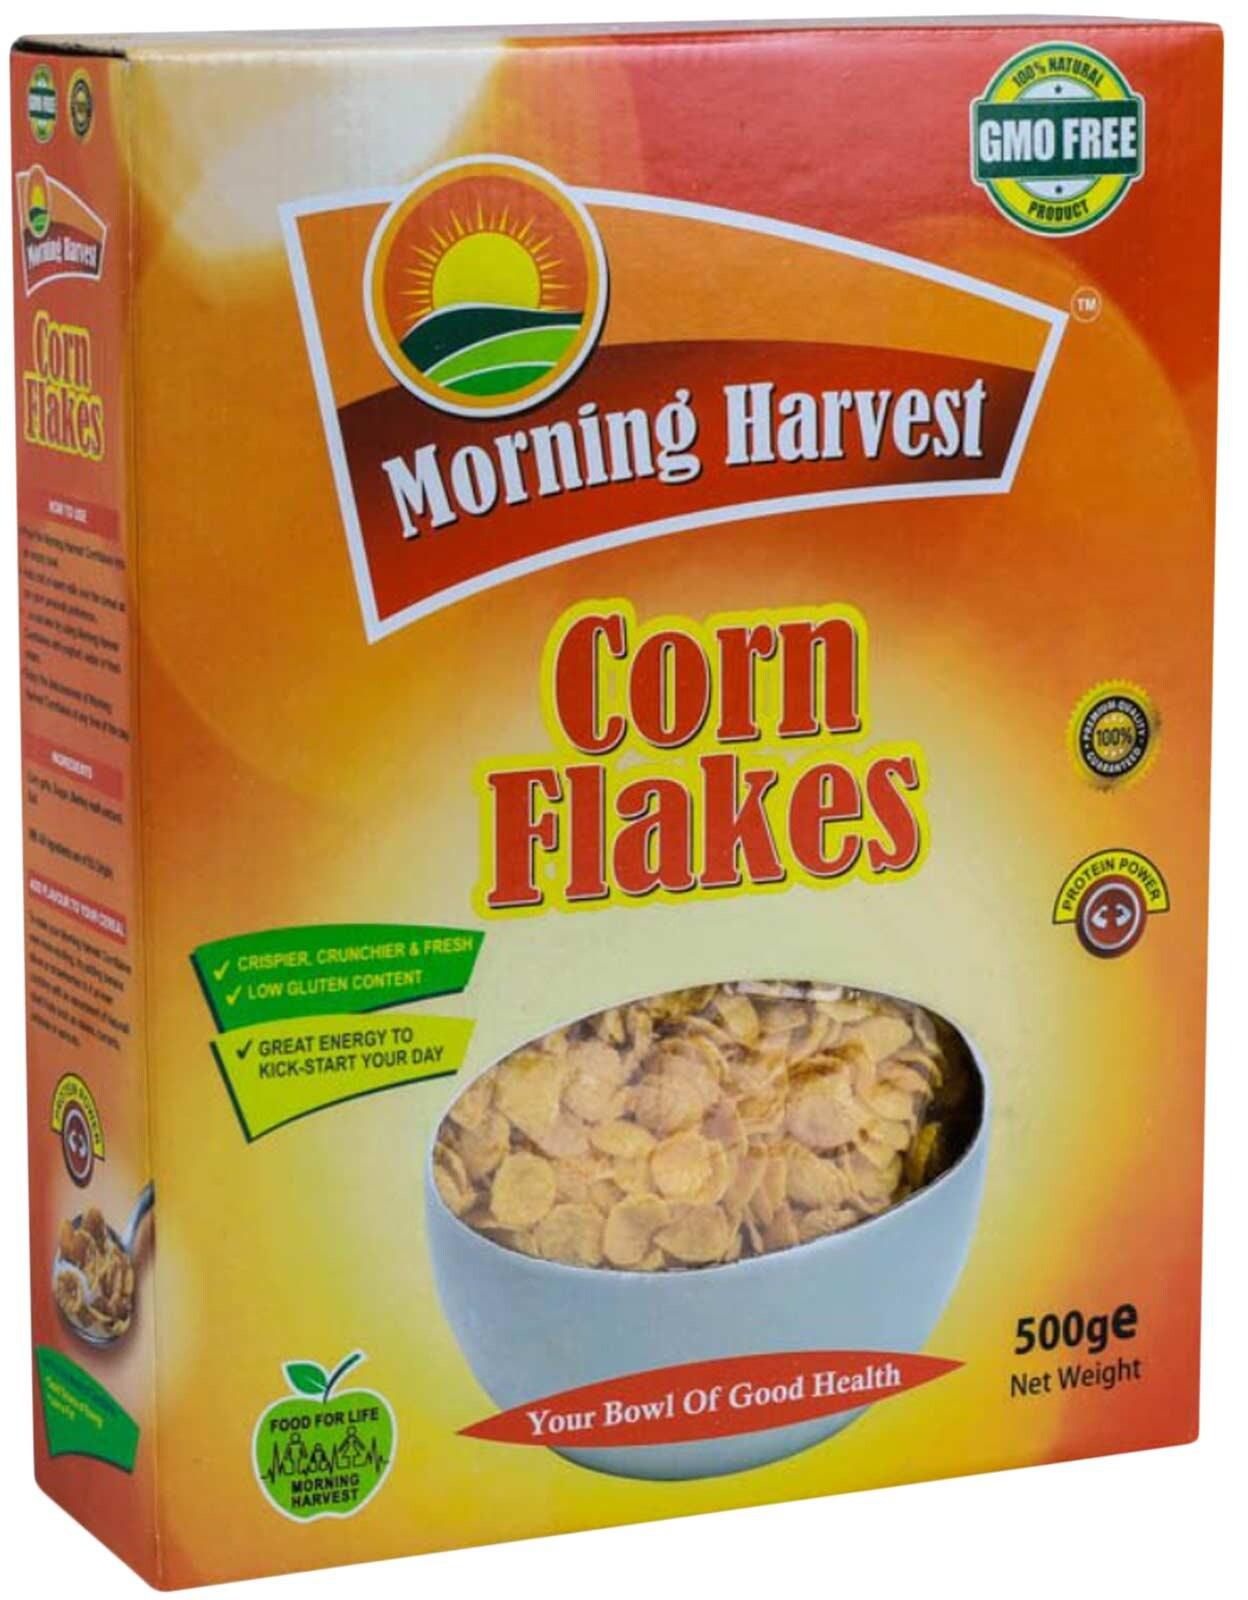 Morning Harvest Strawberry Corn Flakes Box 500g.